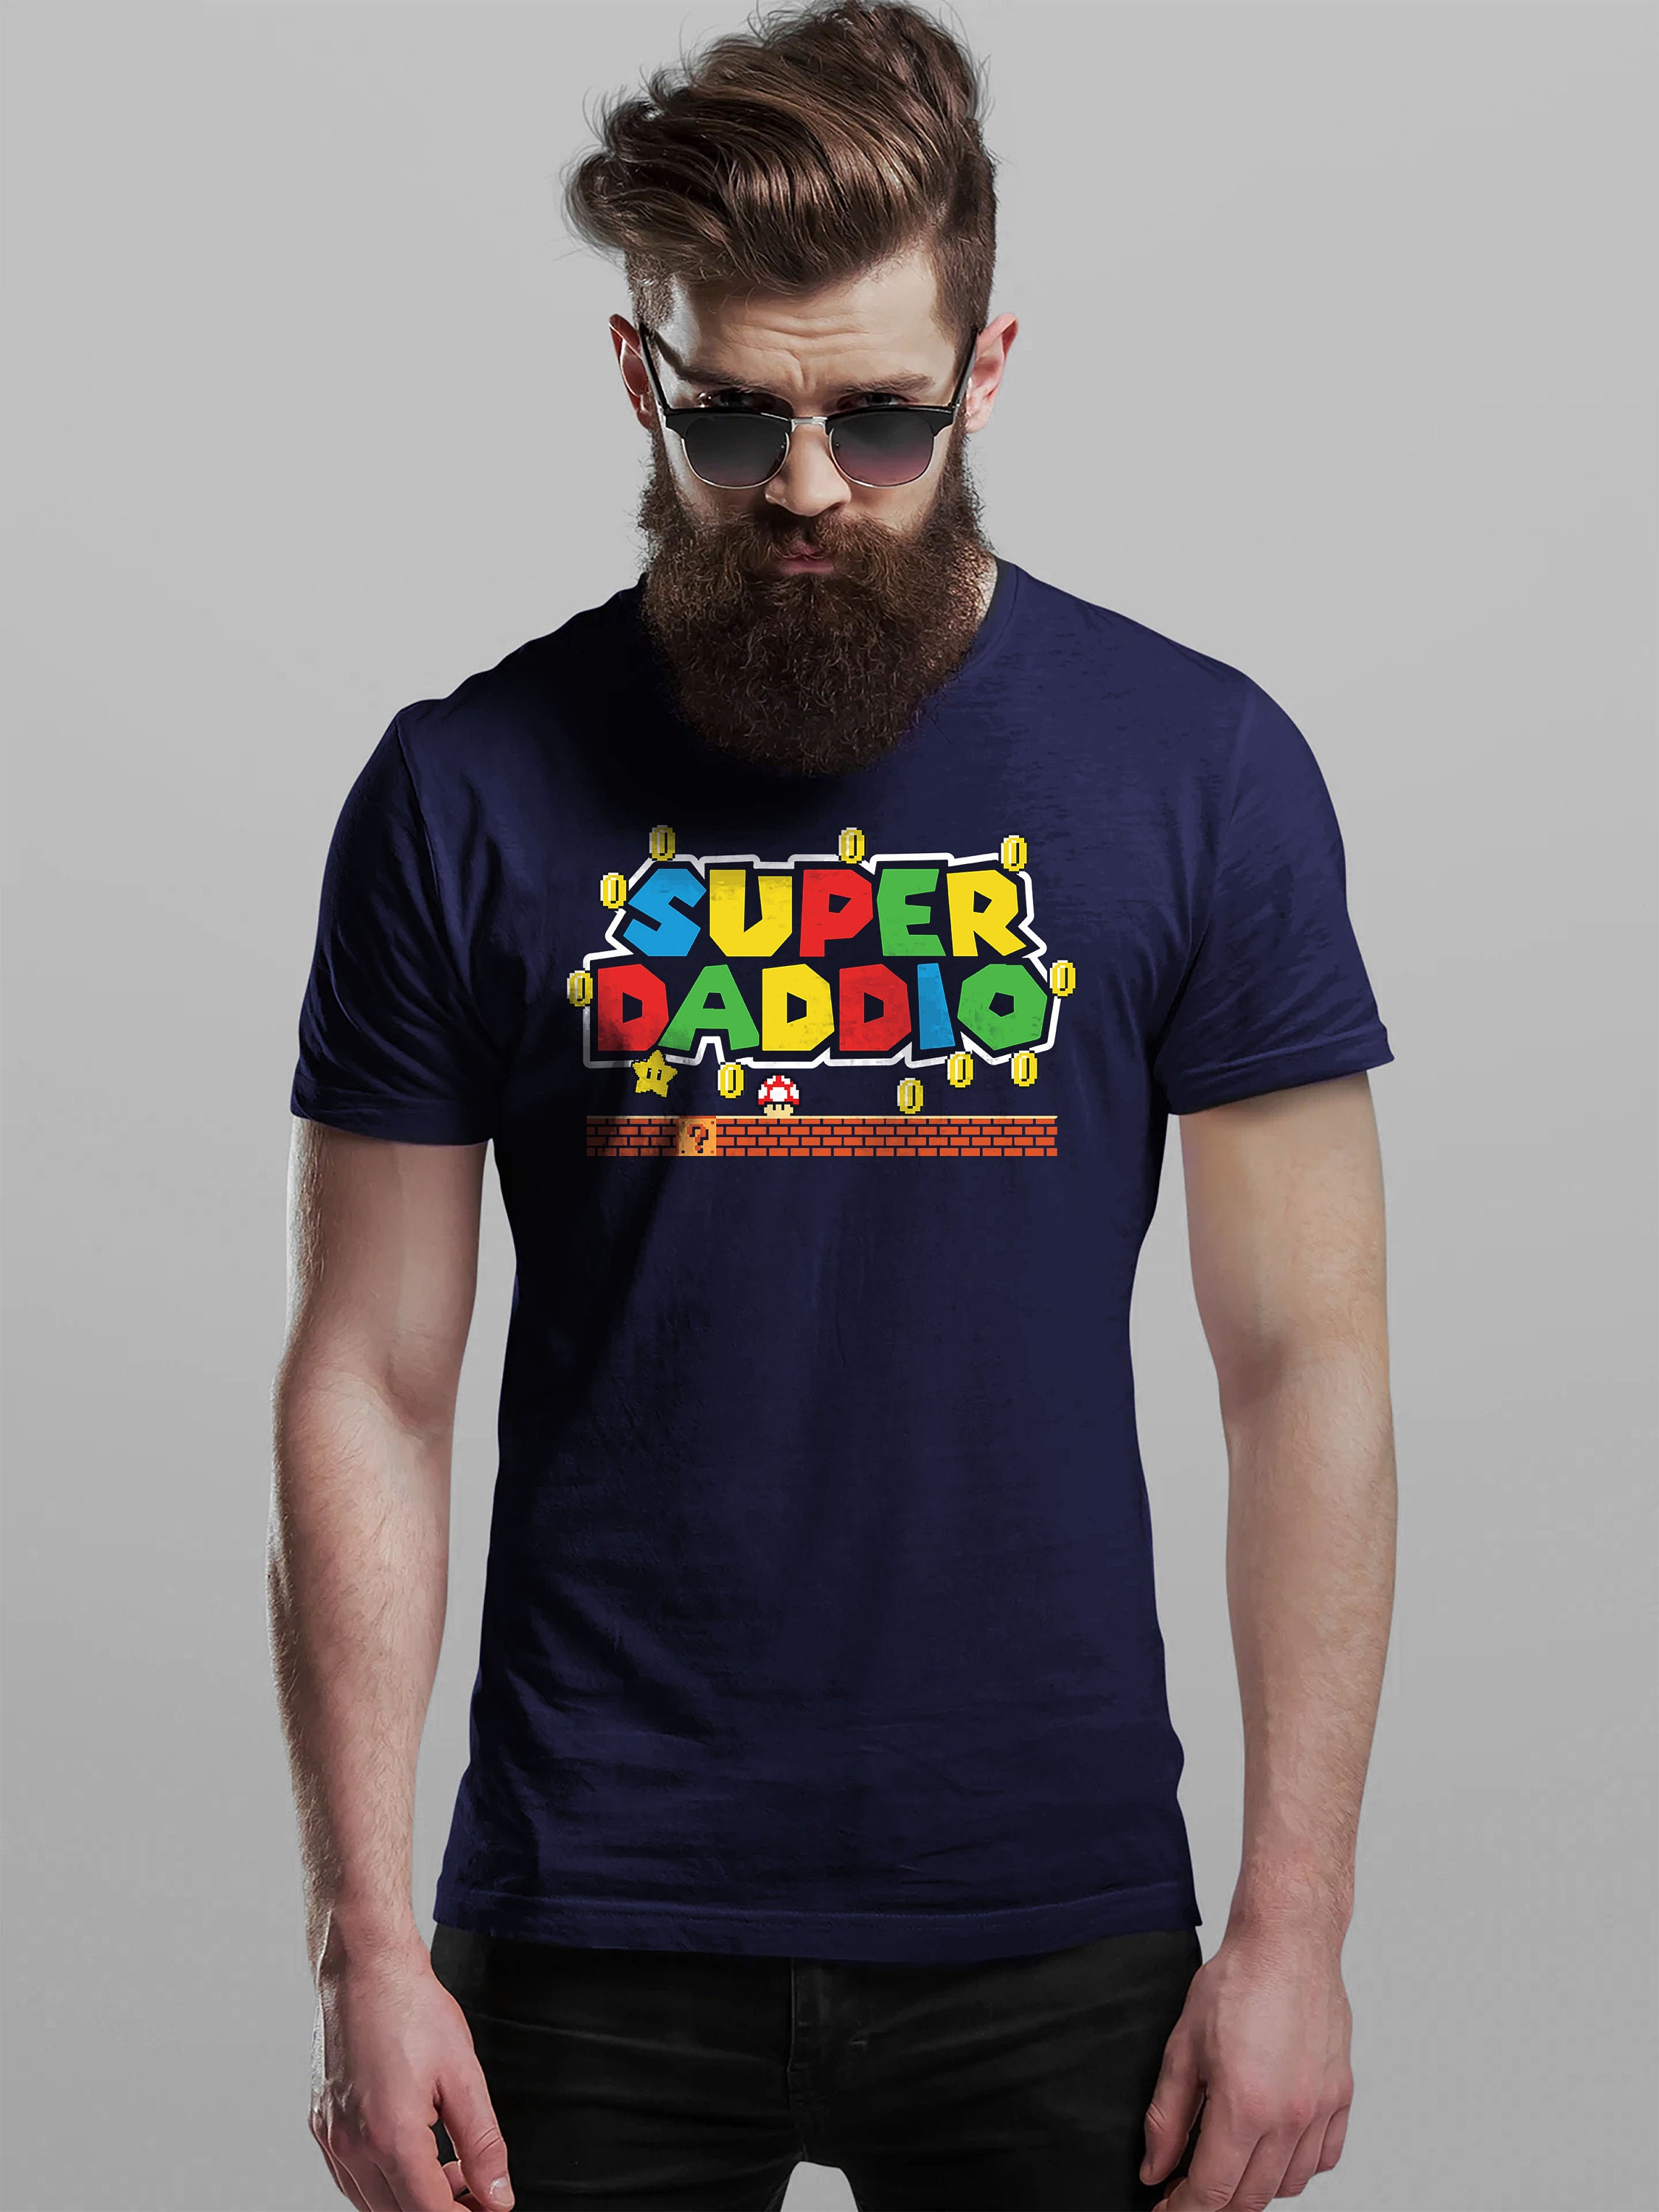 Fathers Day T Shirt Super Daddio Gamer Dad Fun Gift Novelty T-Shirts